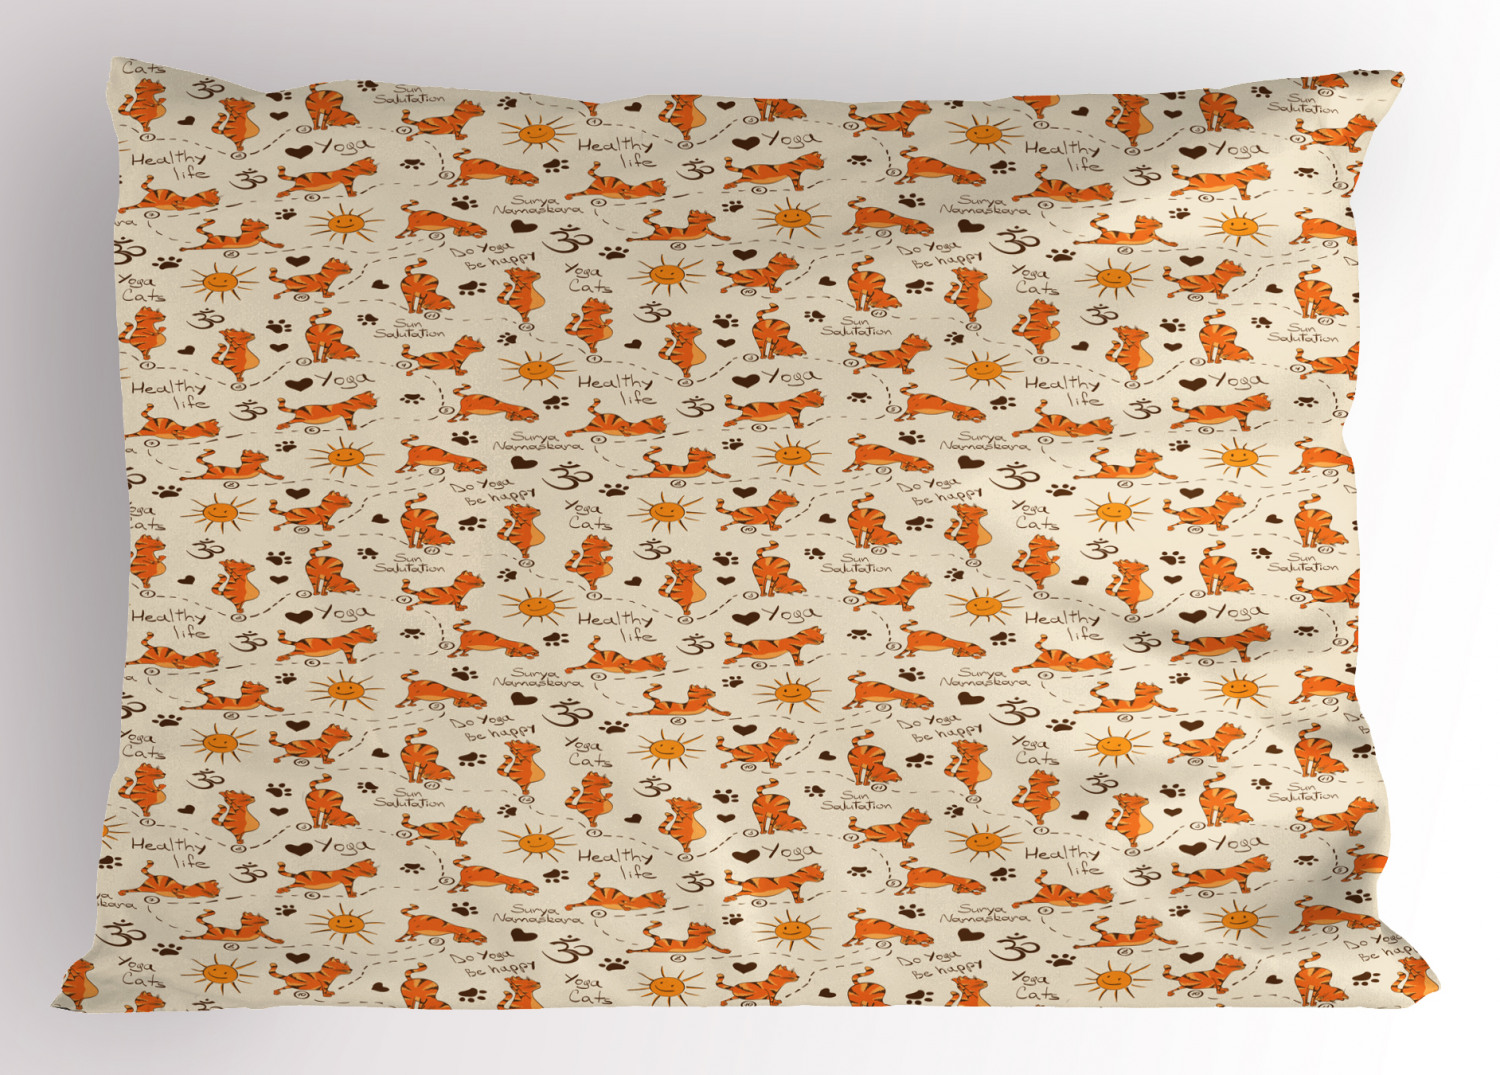 Space Cat Pillow Sham Decorative Pillowcase 3 Sizes Bedroom Decor 